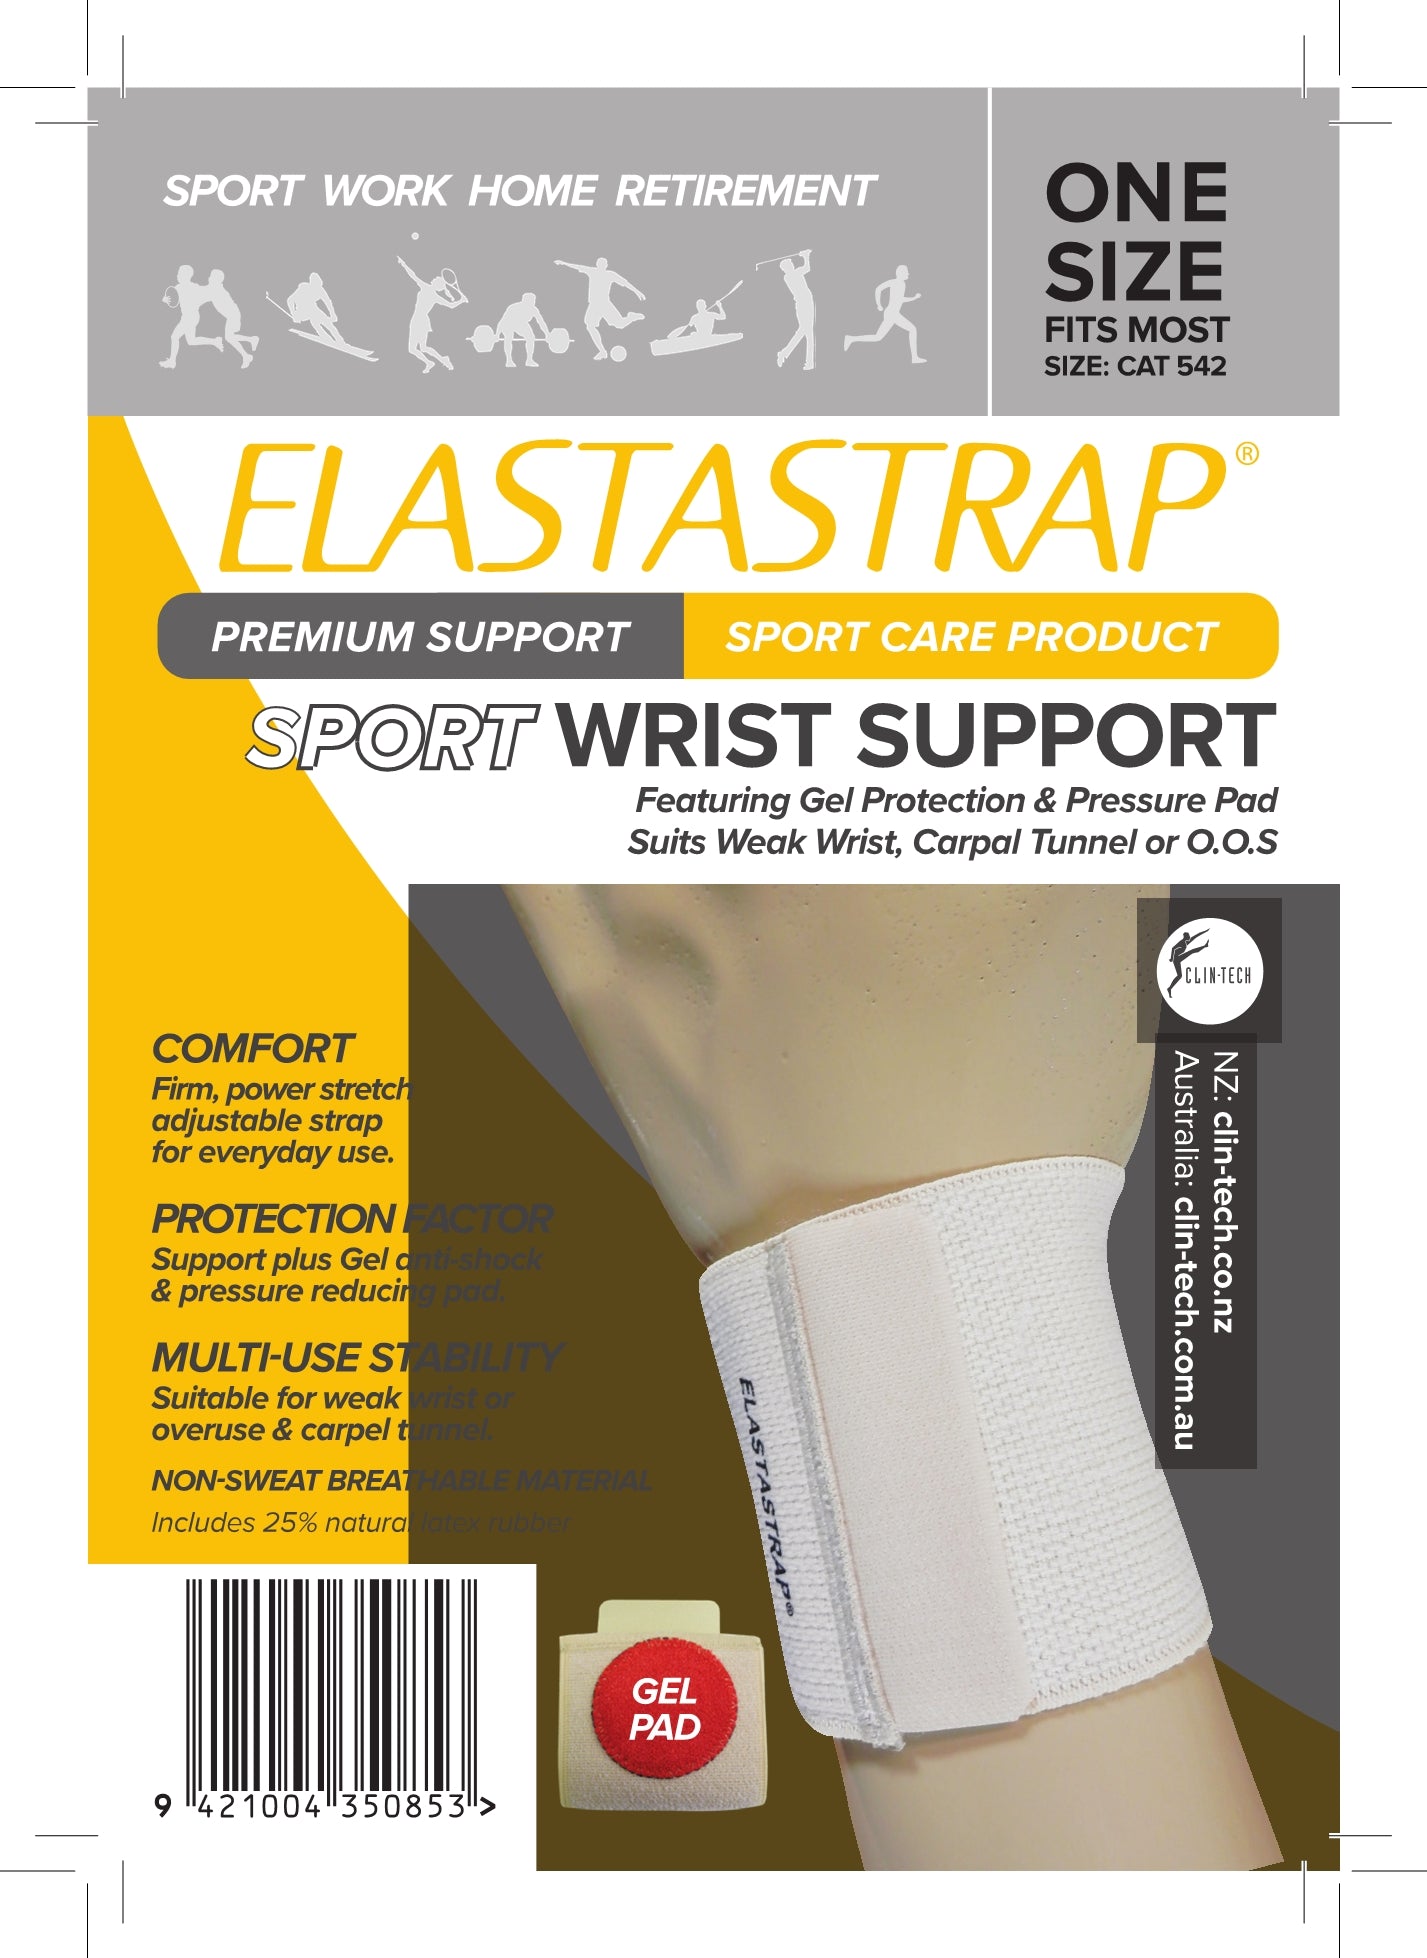 Elastastrap Premium Sports Wrist